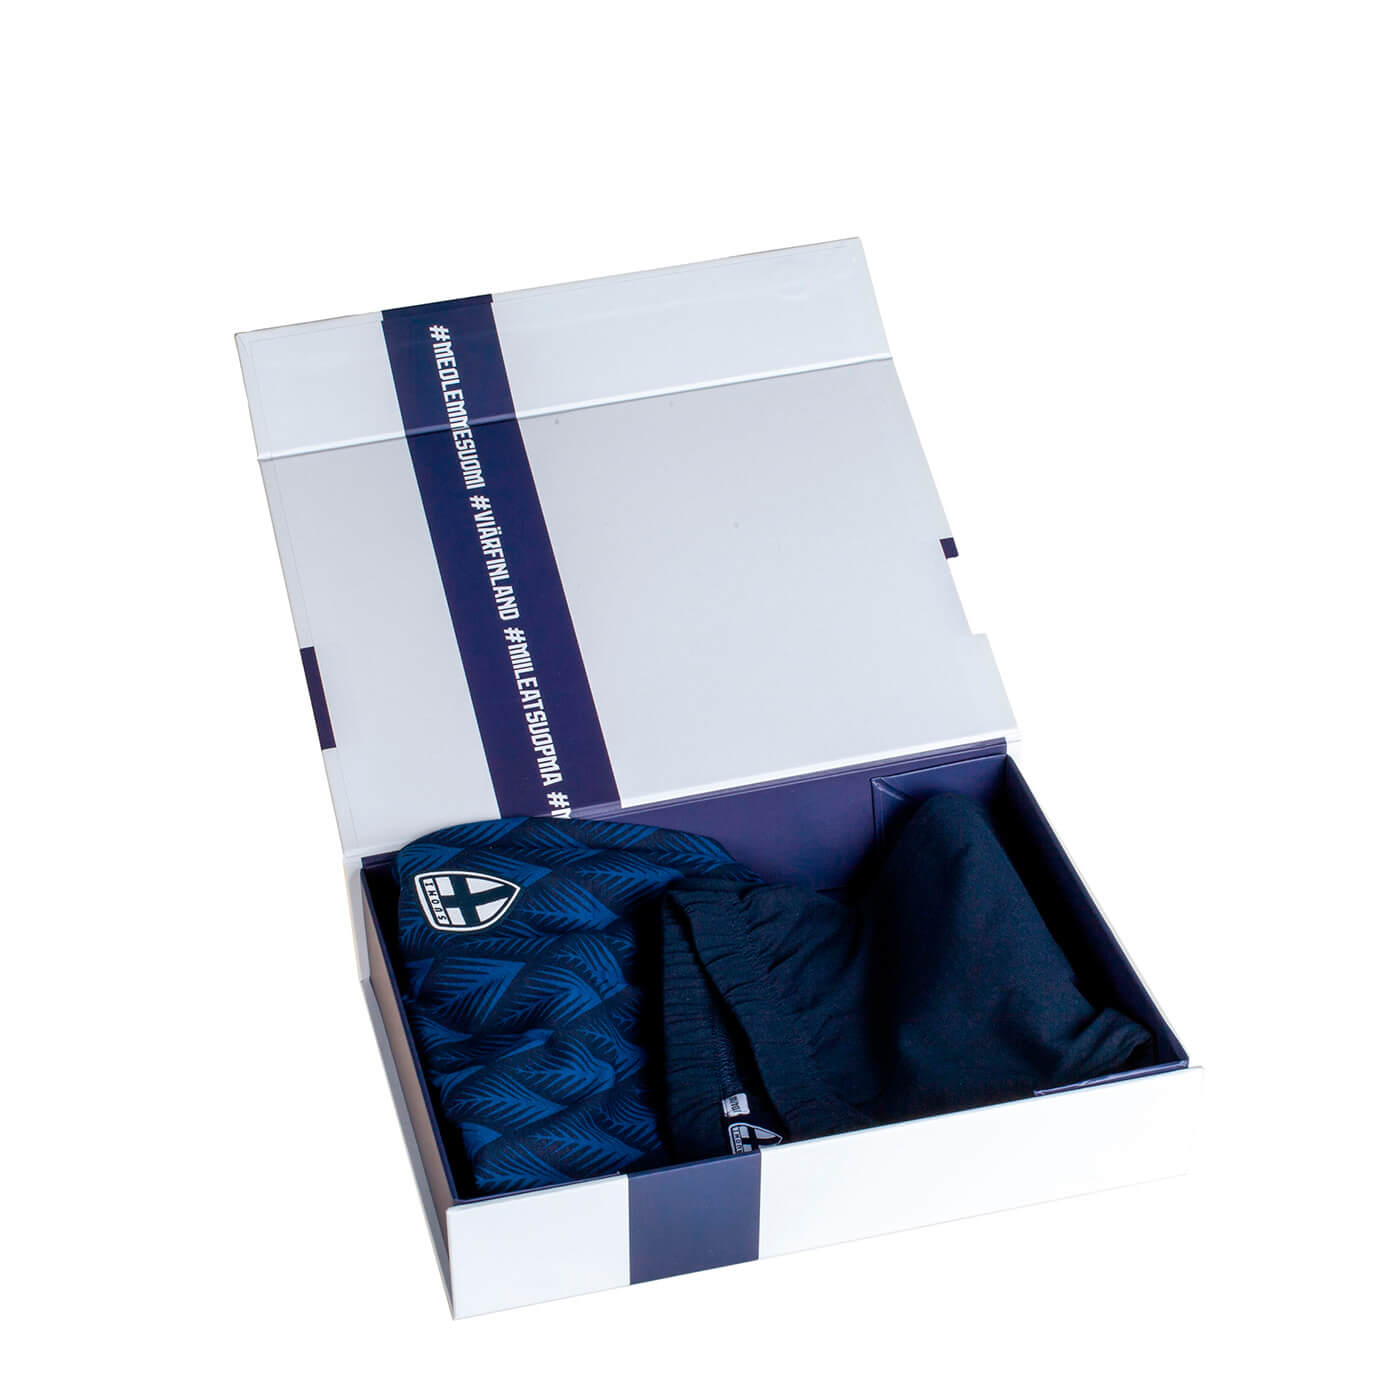 Finland gift box